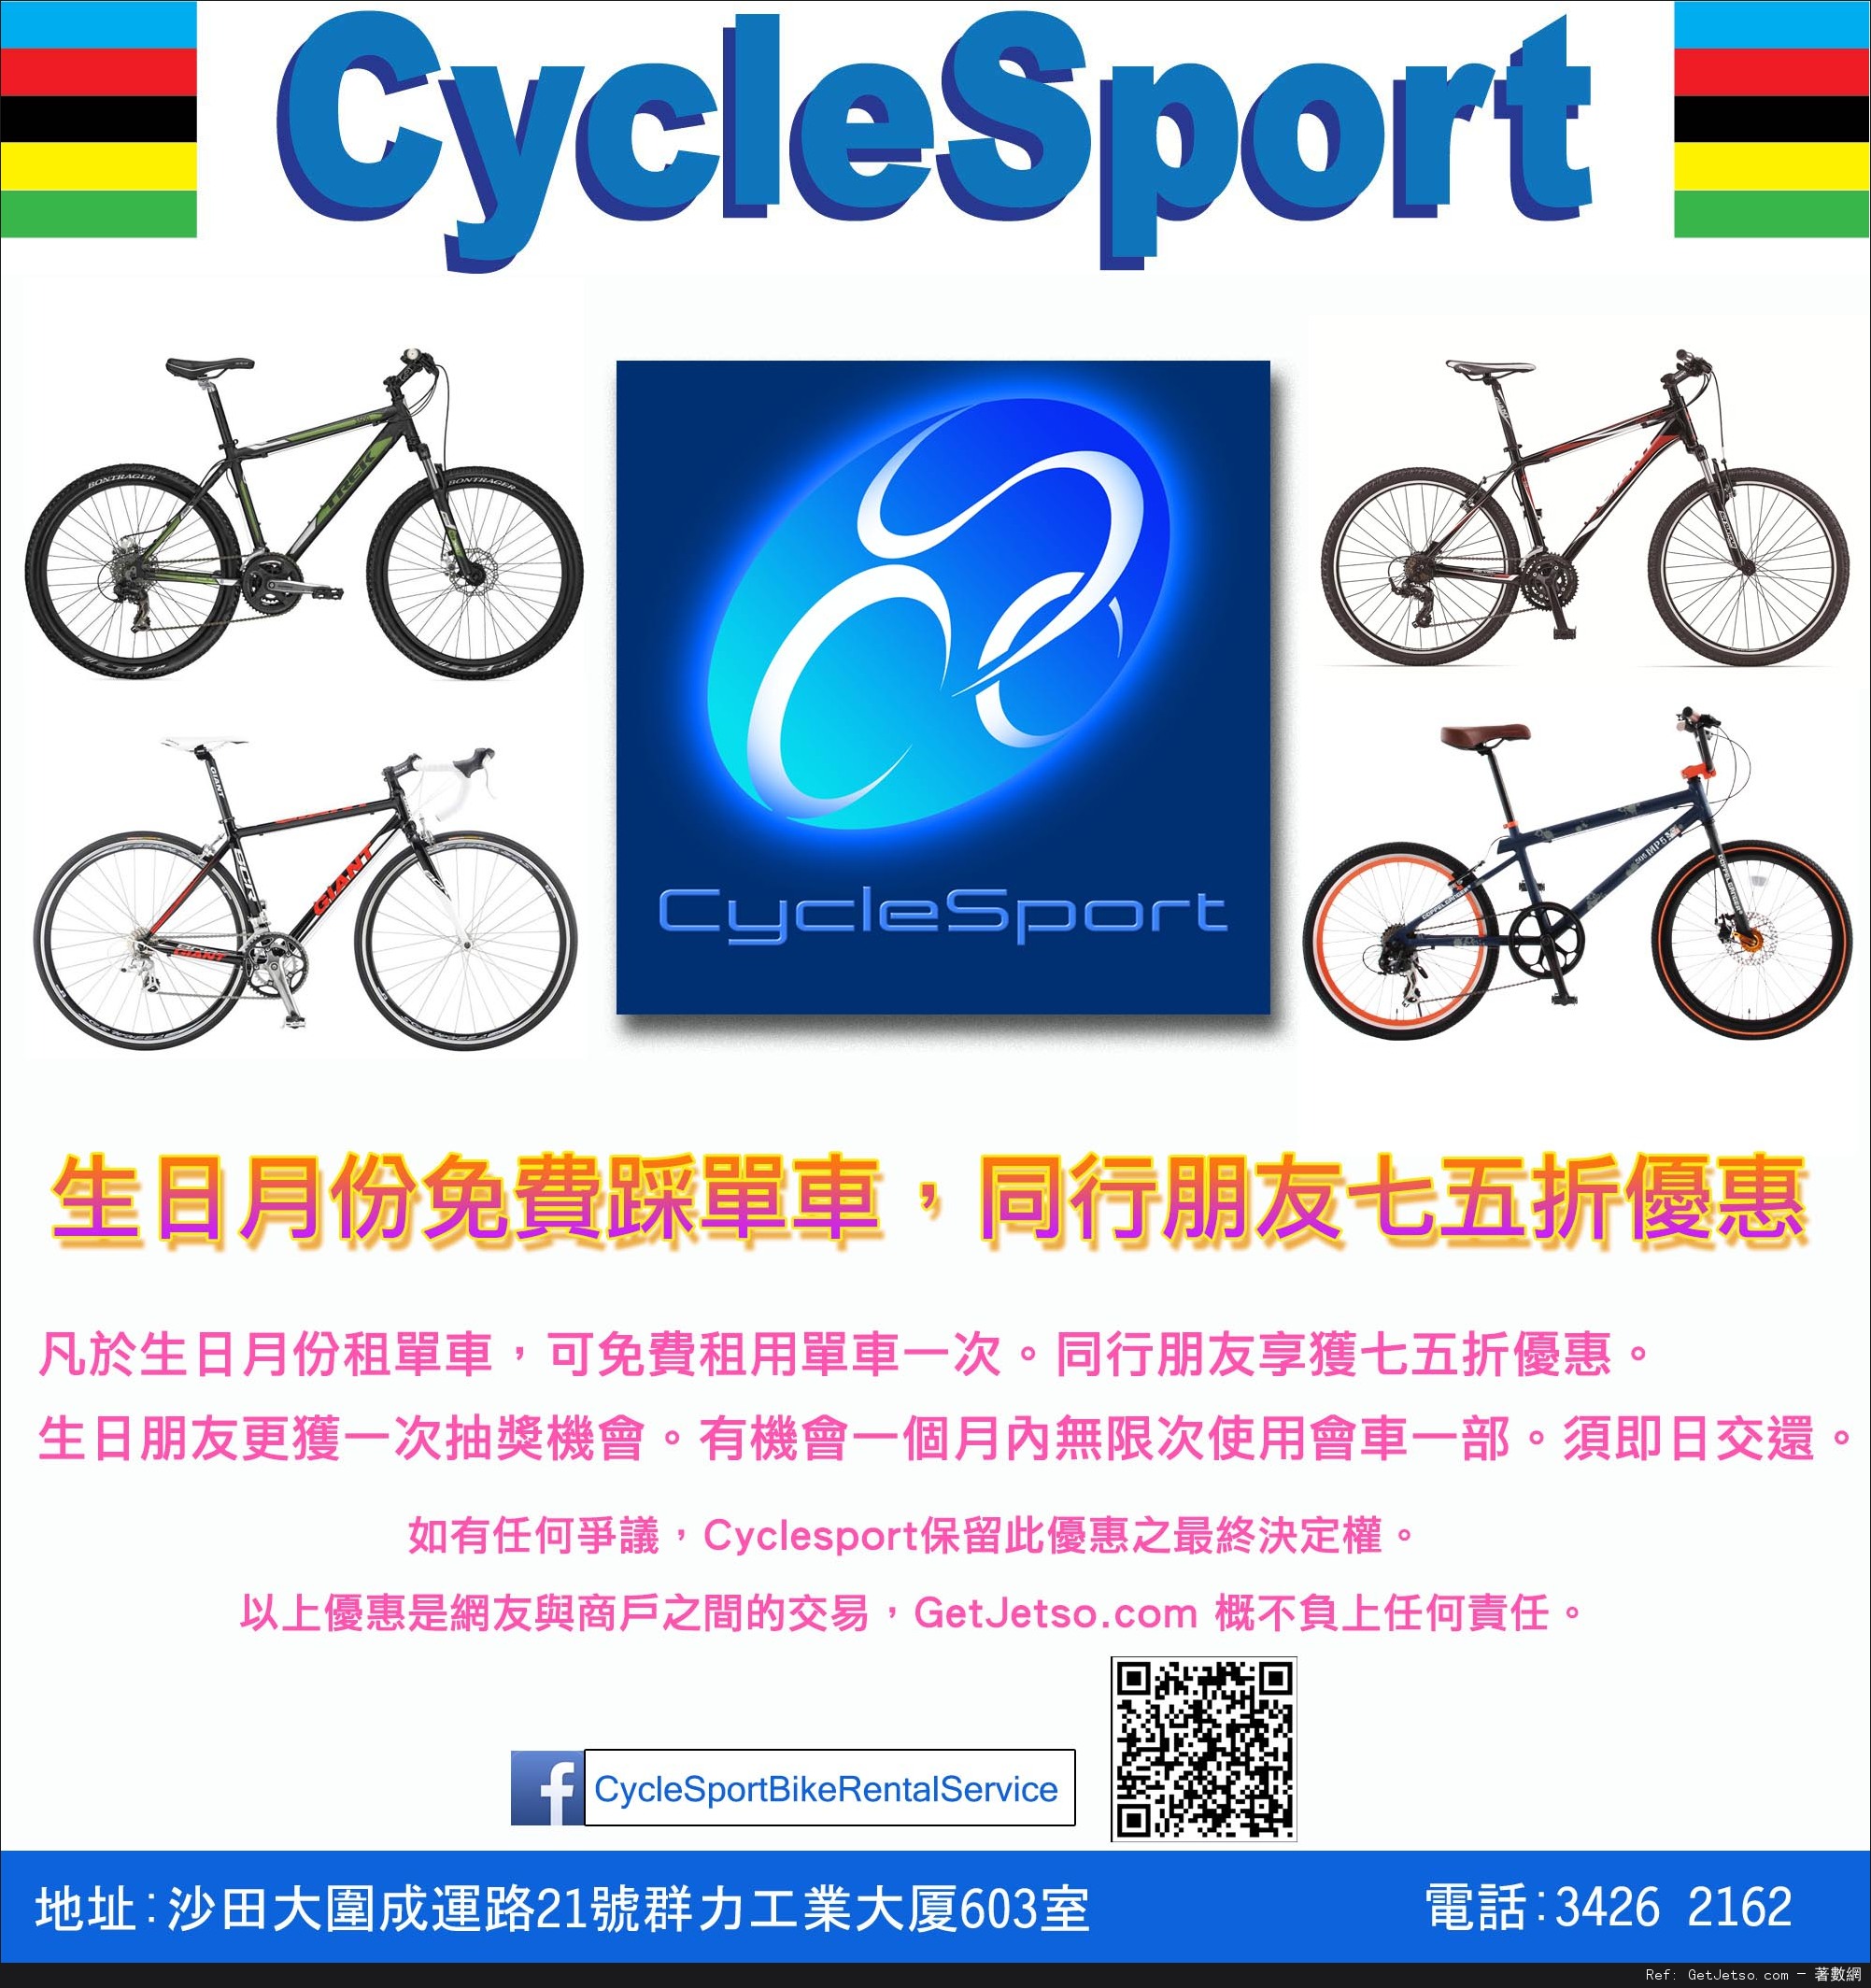 Cyclesport 生日月份免費租單車及同行朋友75折優惠券(至14年9月30日)圖片1